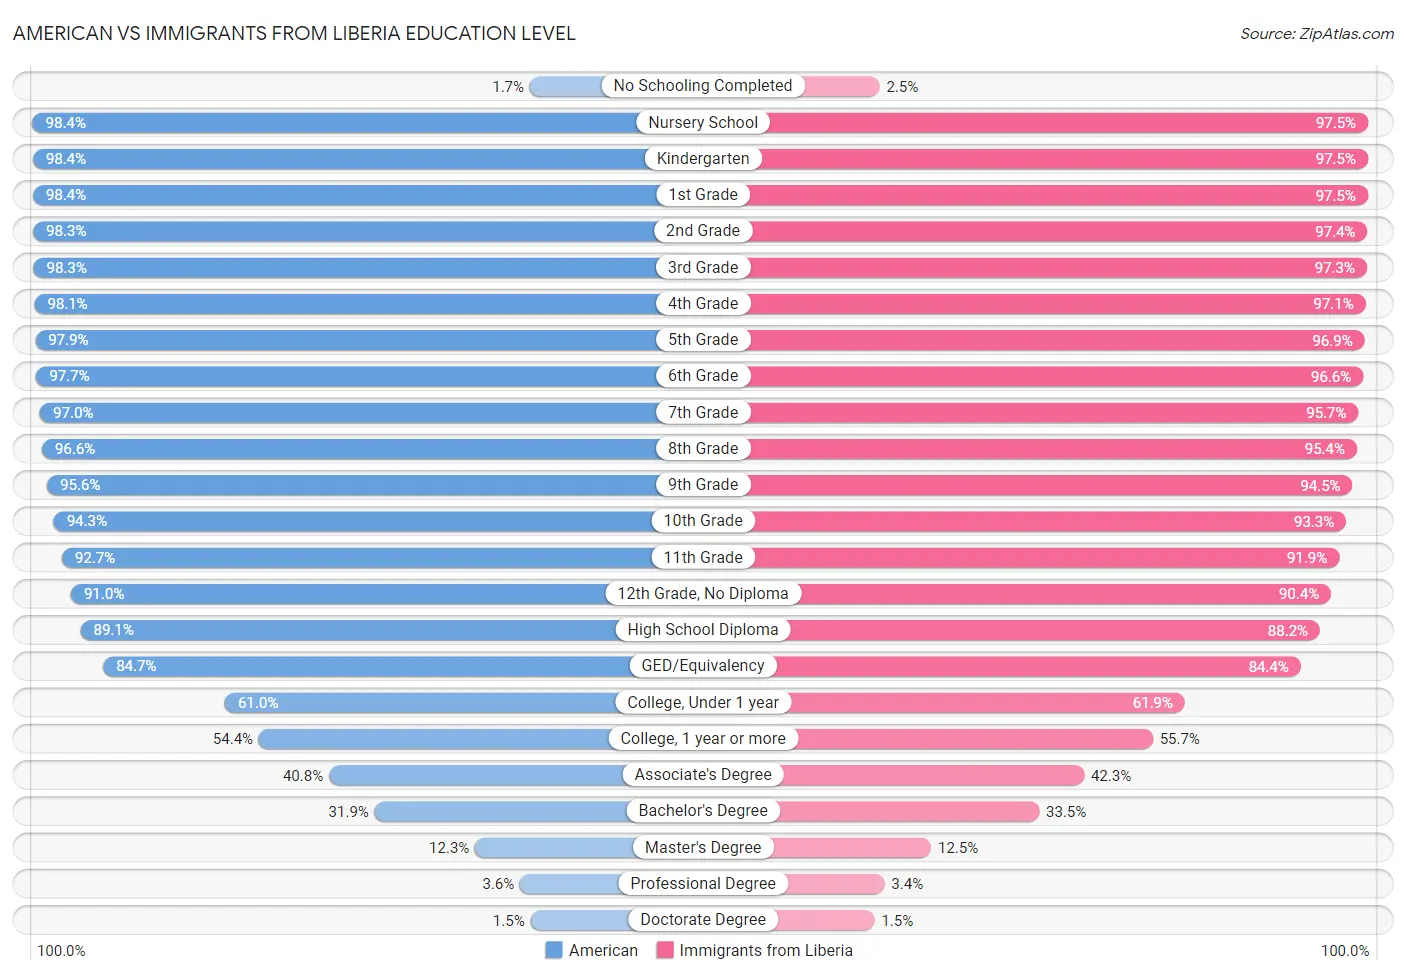 American vs Immigrants from Liberia Education Level